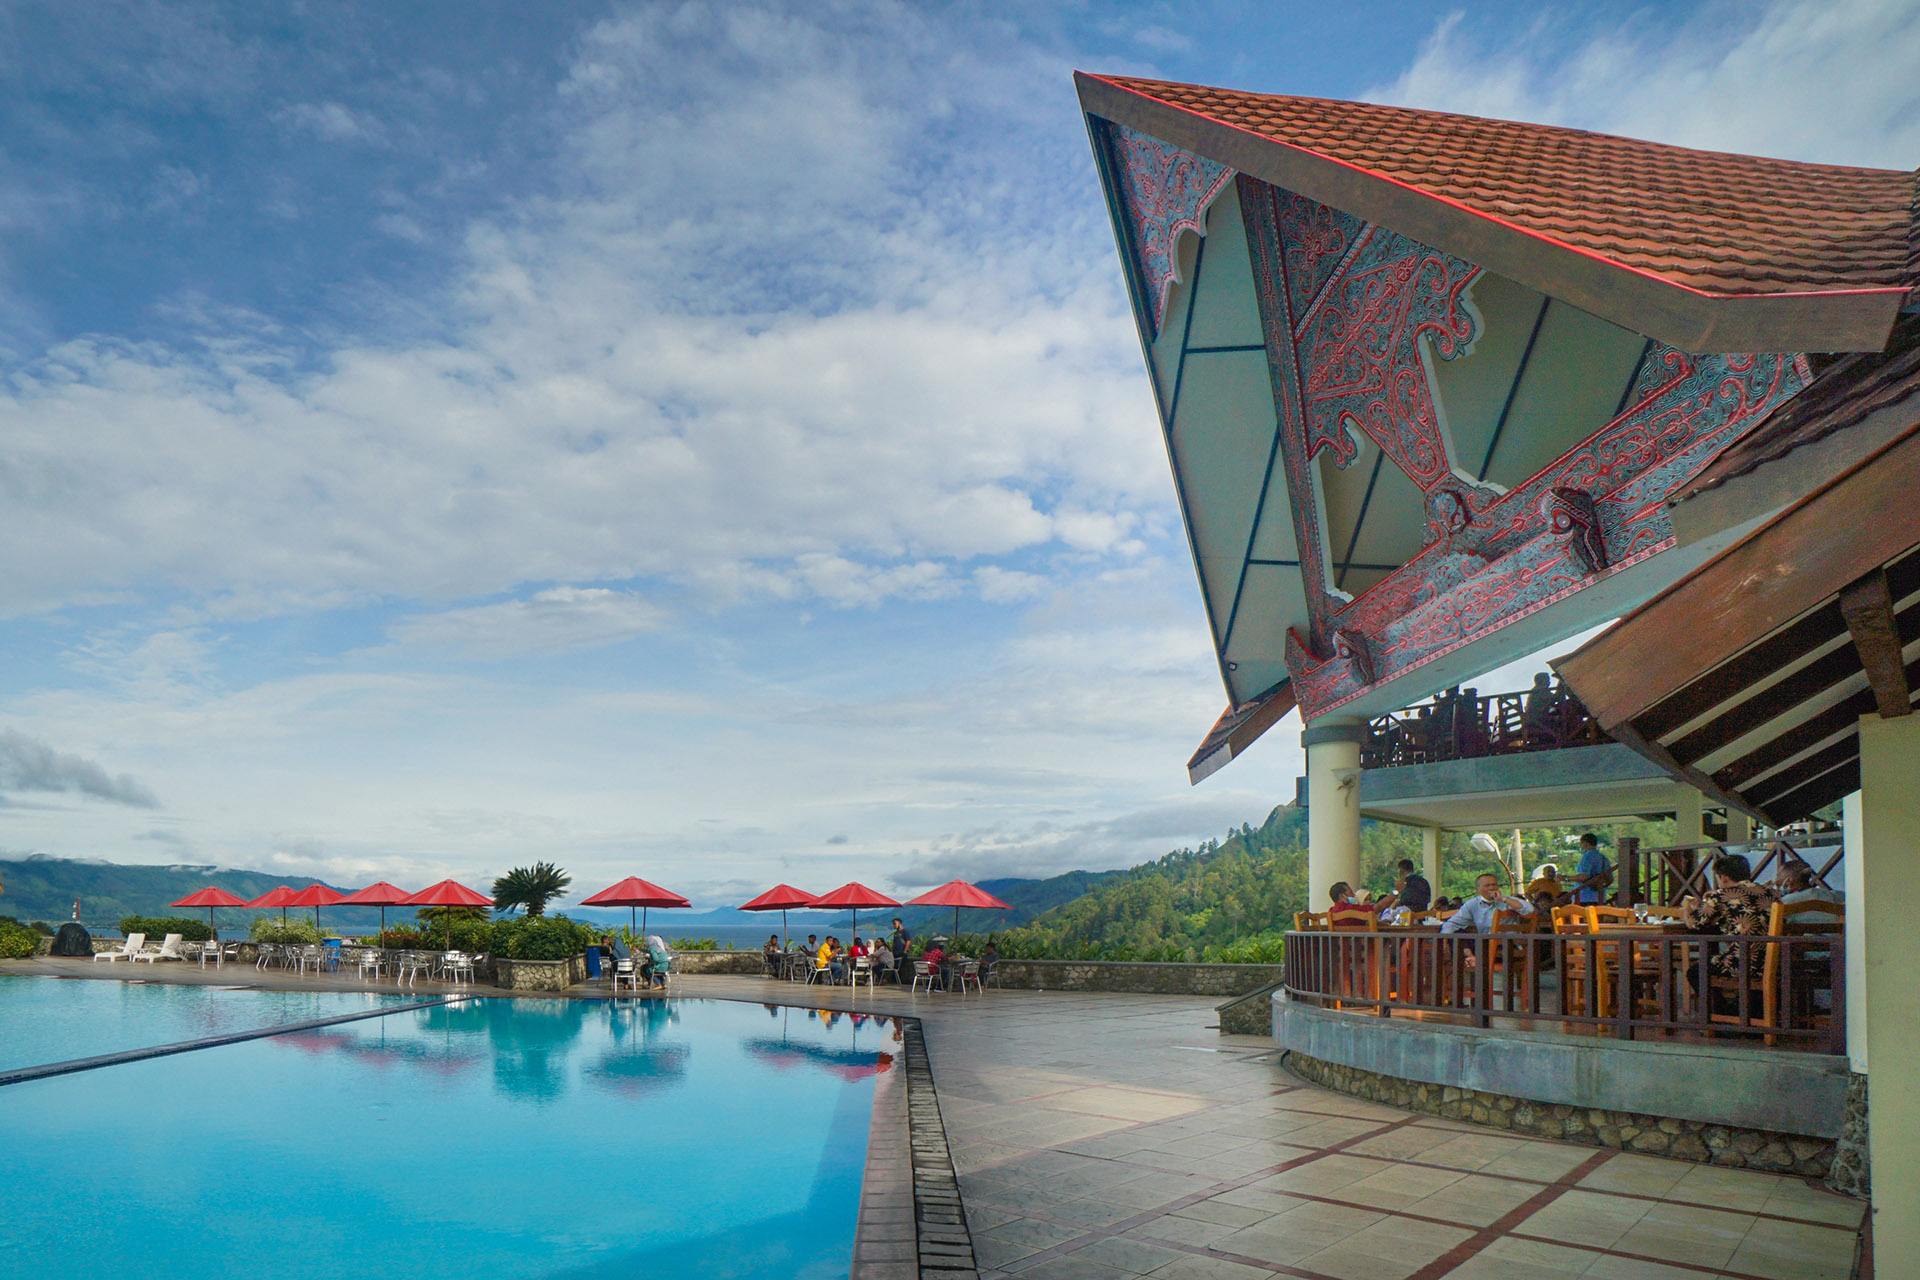 Sport & Beauty 3, Niagara Hotel Lake Toba & Resort, Simalungun